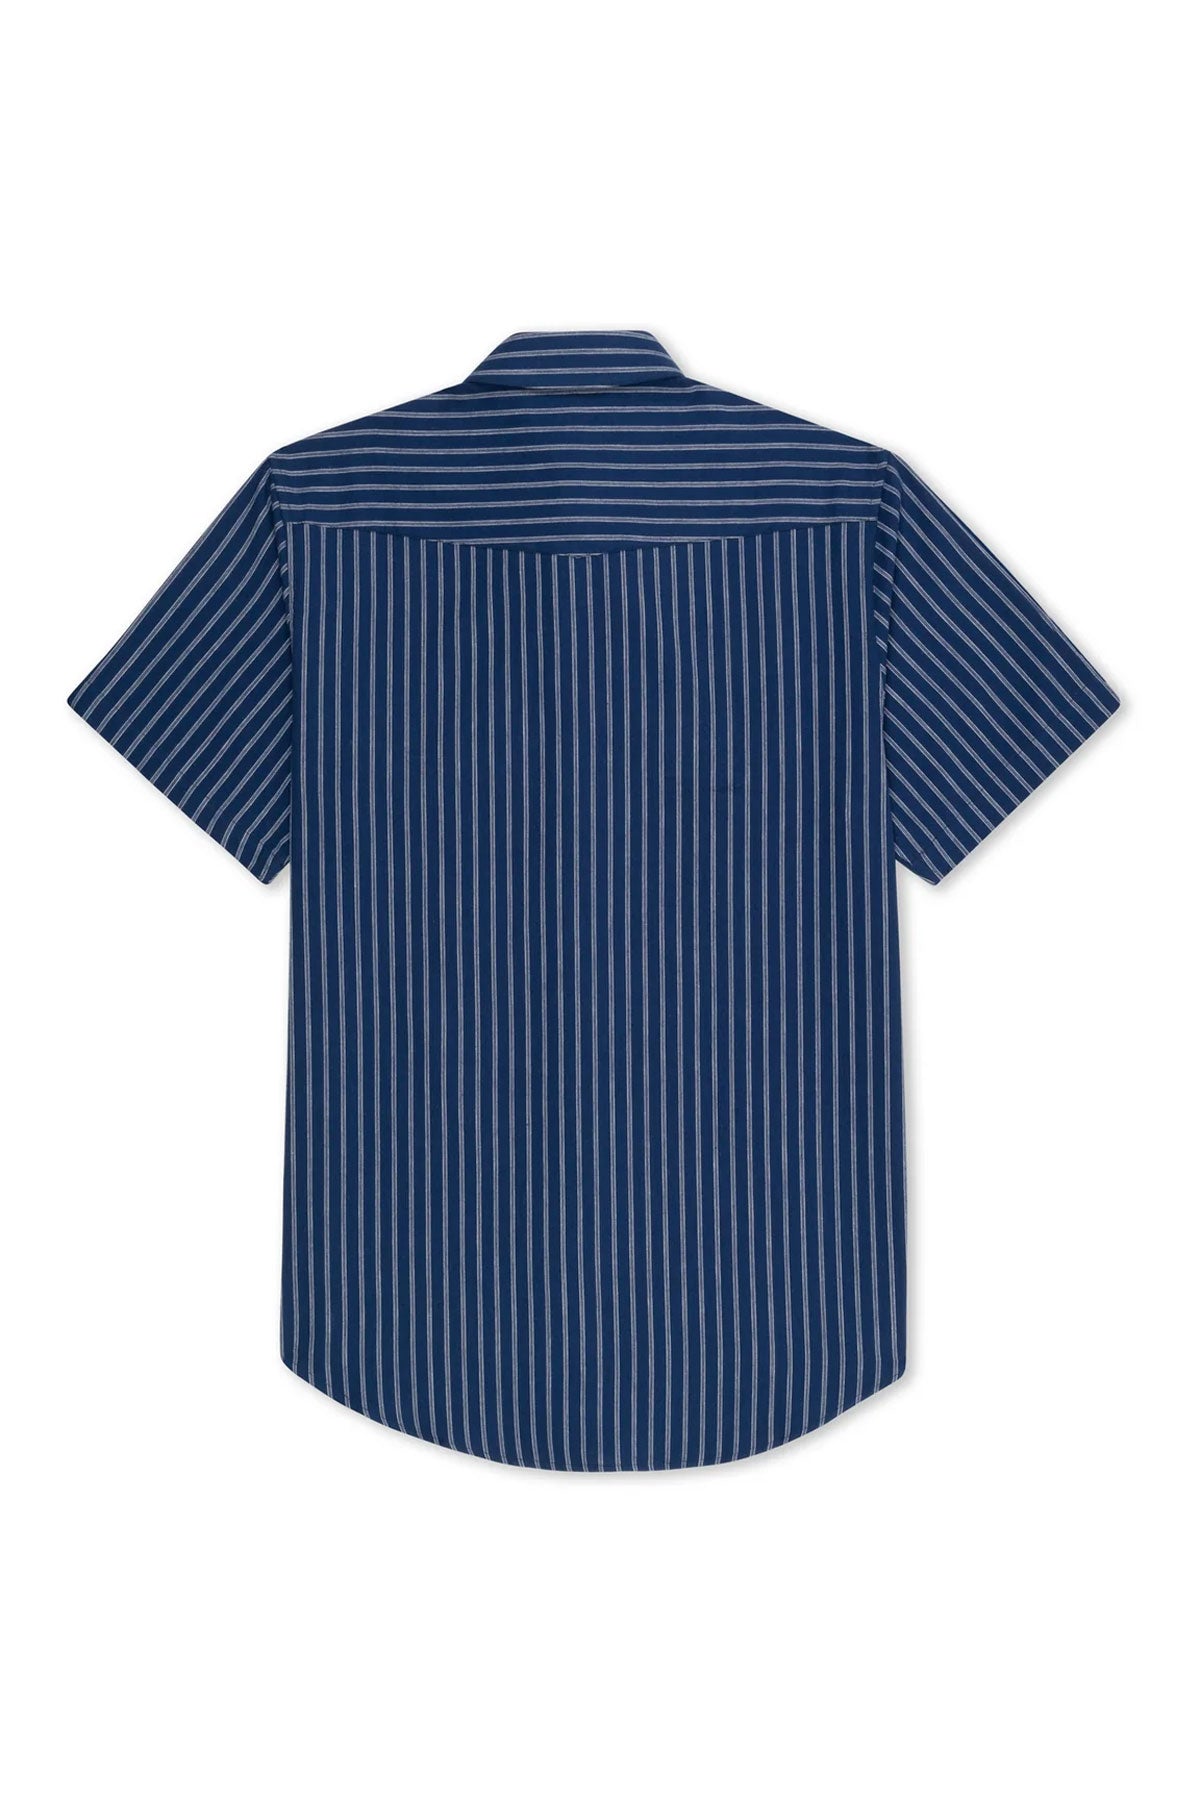 West Major - Indigo Selvedge Stripe Short Sleeve Western Shirt